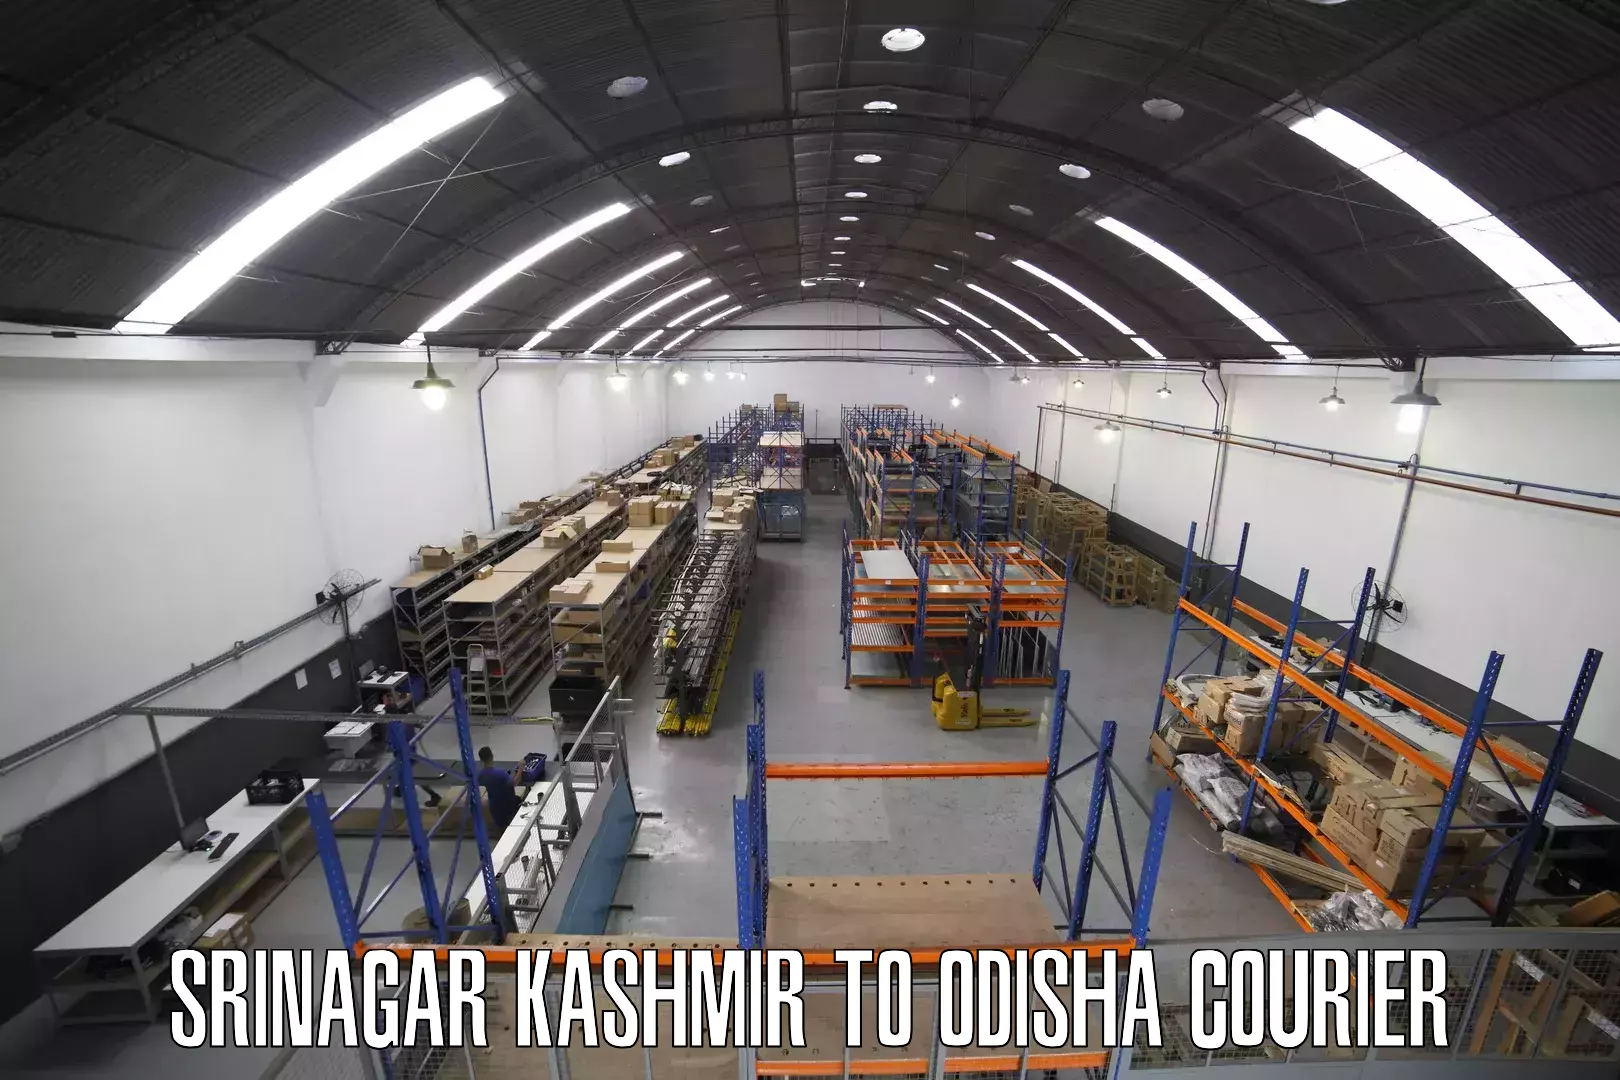 Courier service comparison in Srinagar Kashmir to Kishorenagar